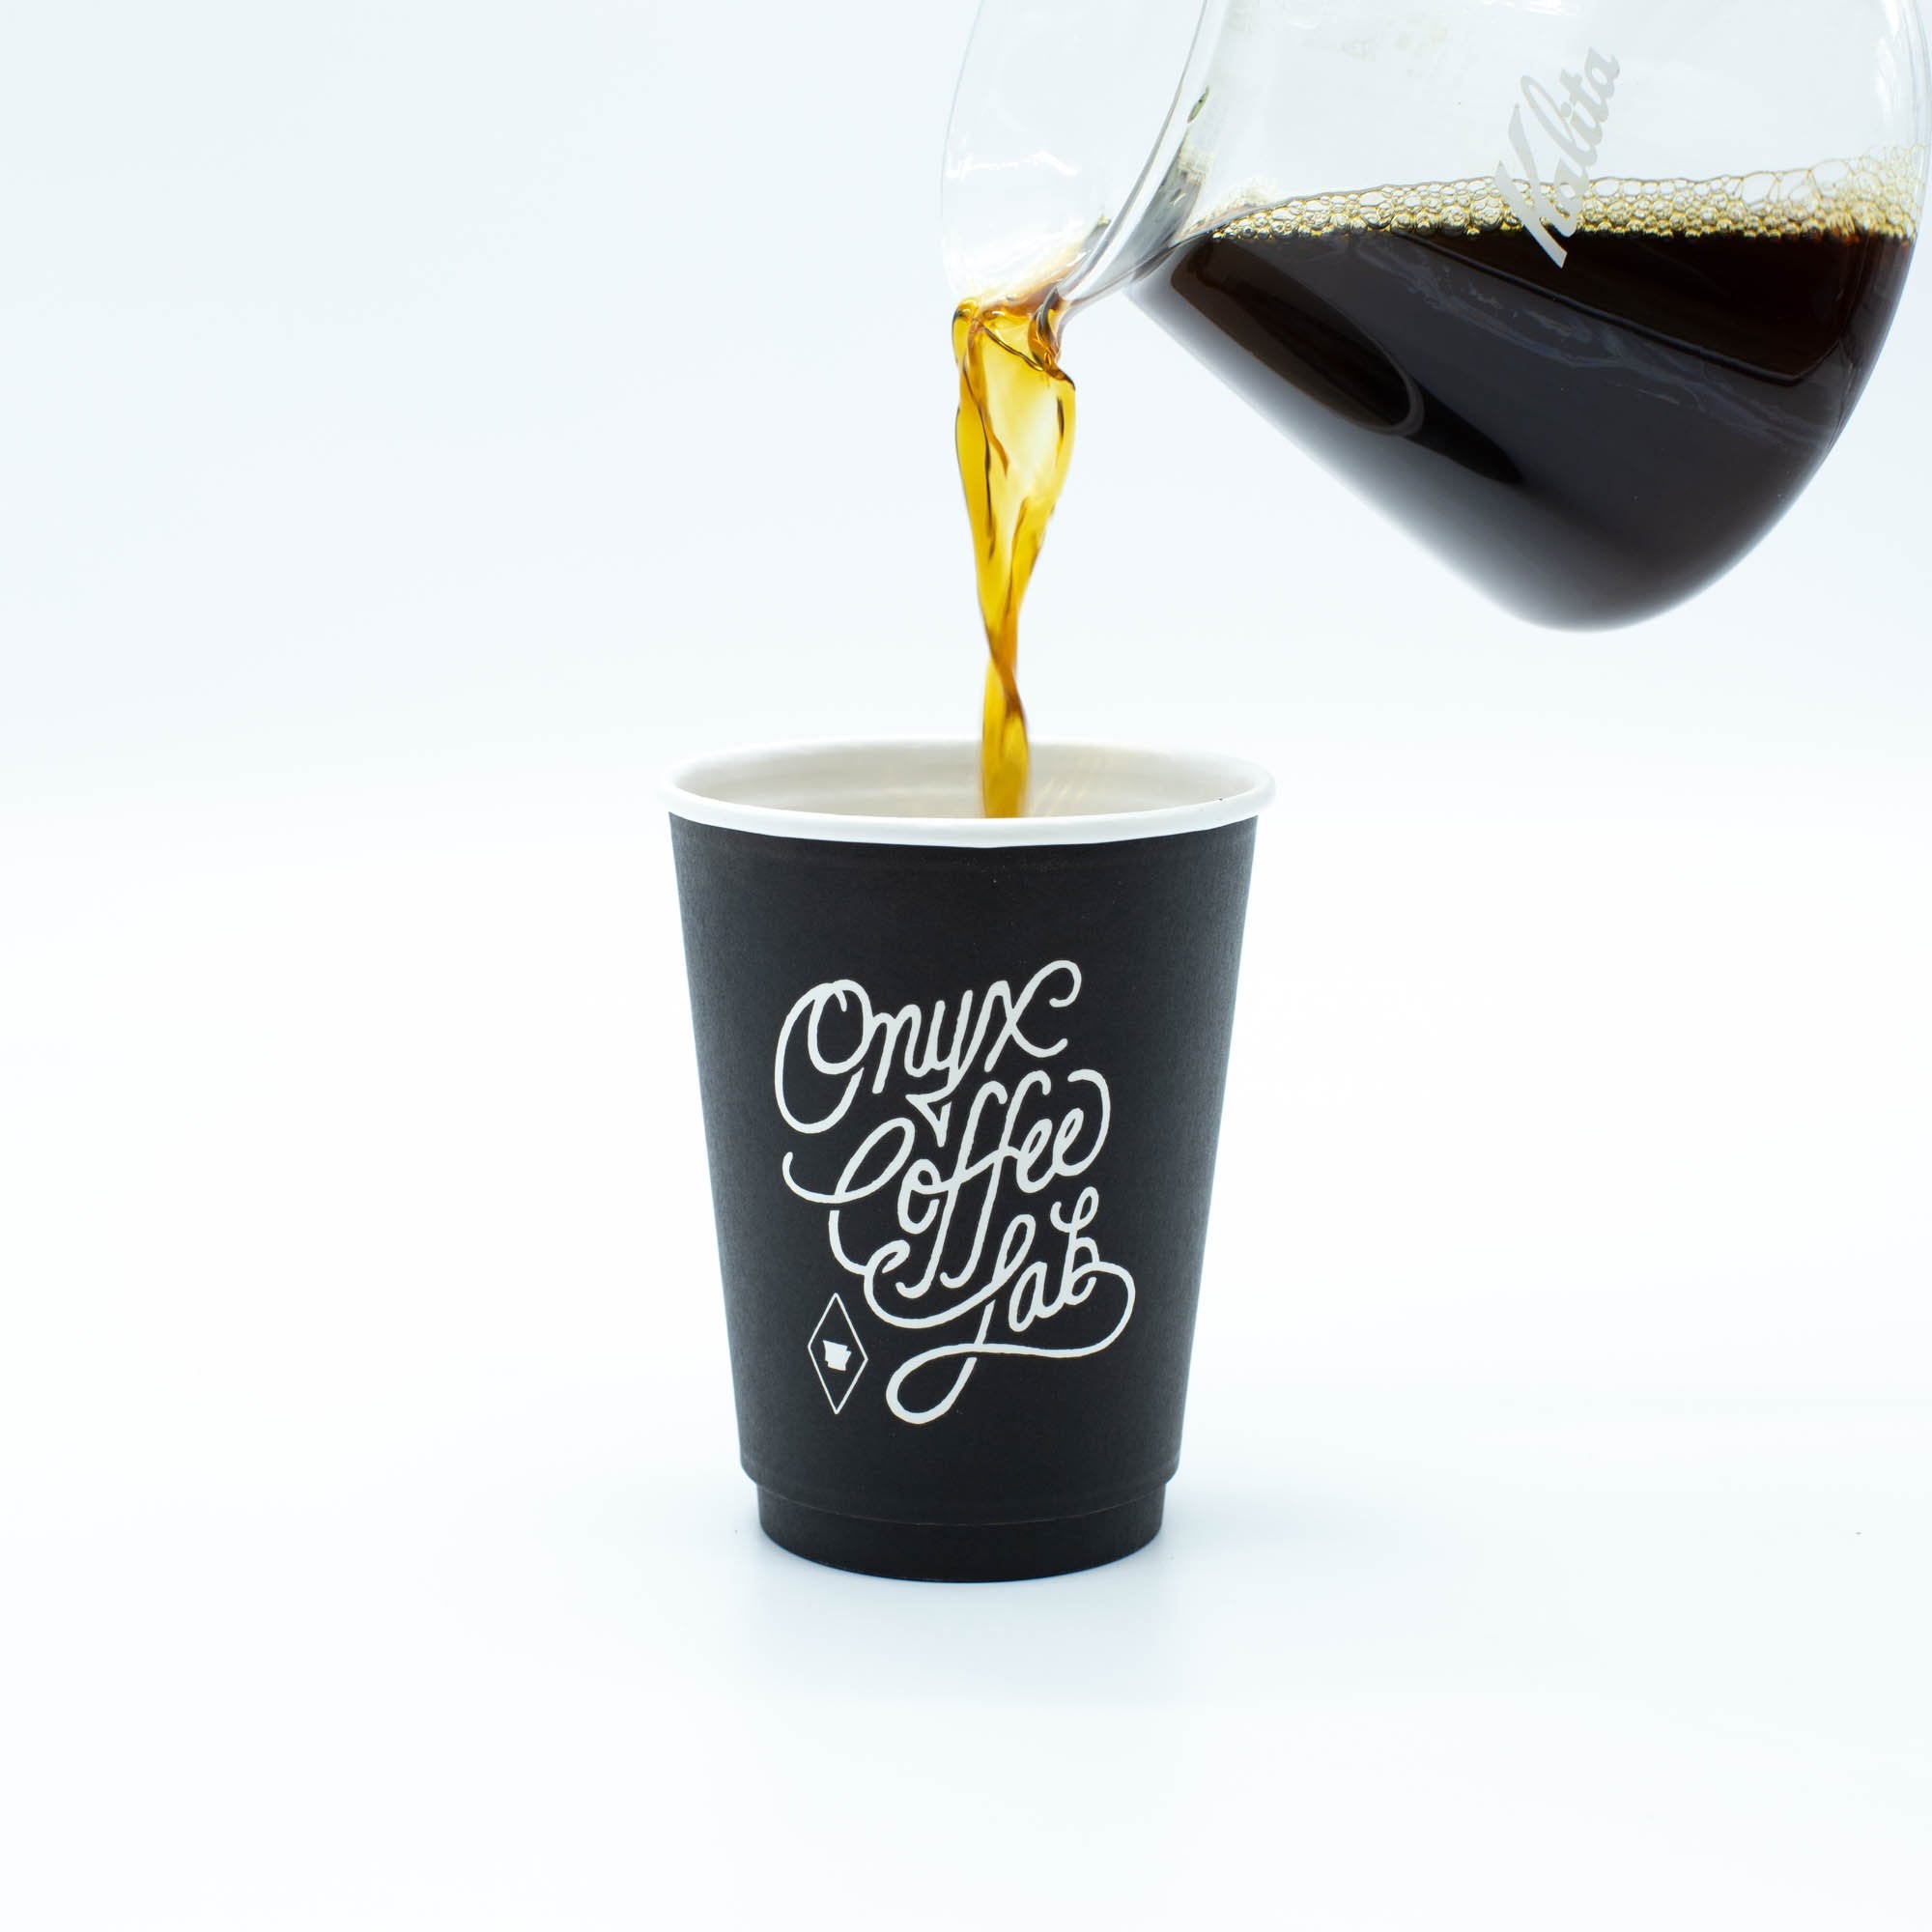 Coffee – Onyx Coffee Lab